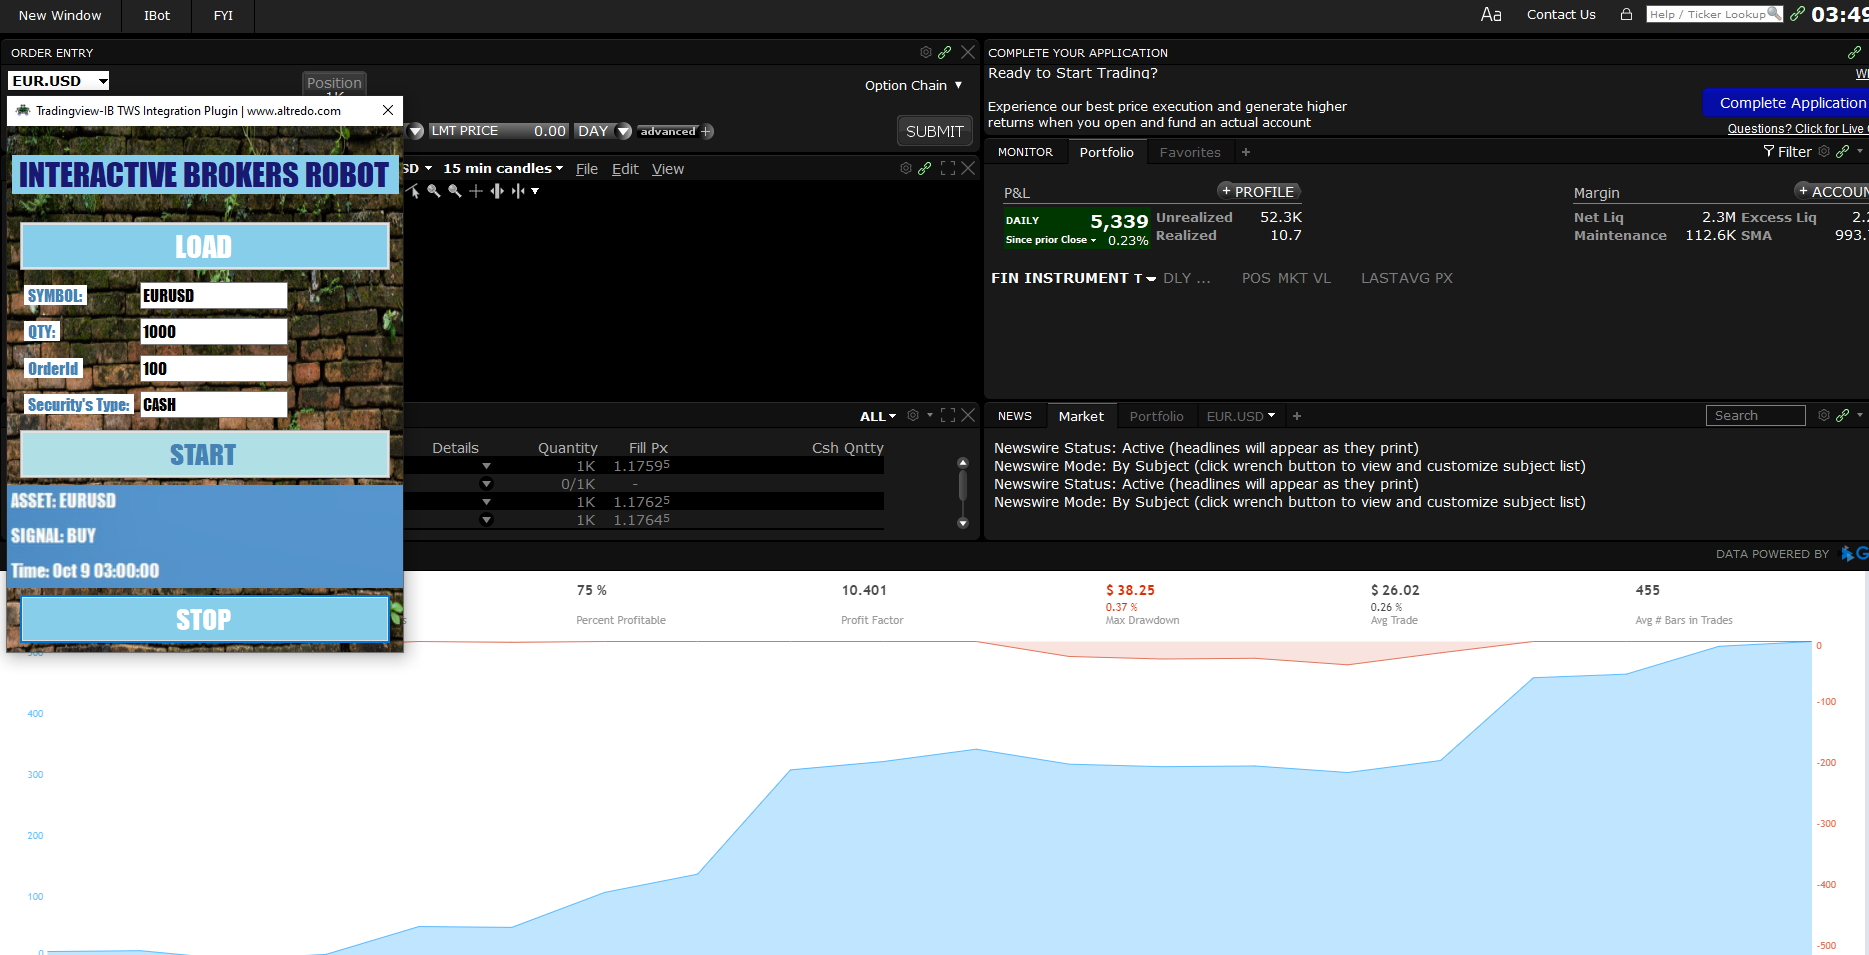 Interactive Brokers Trading Robot performance report.